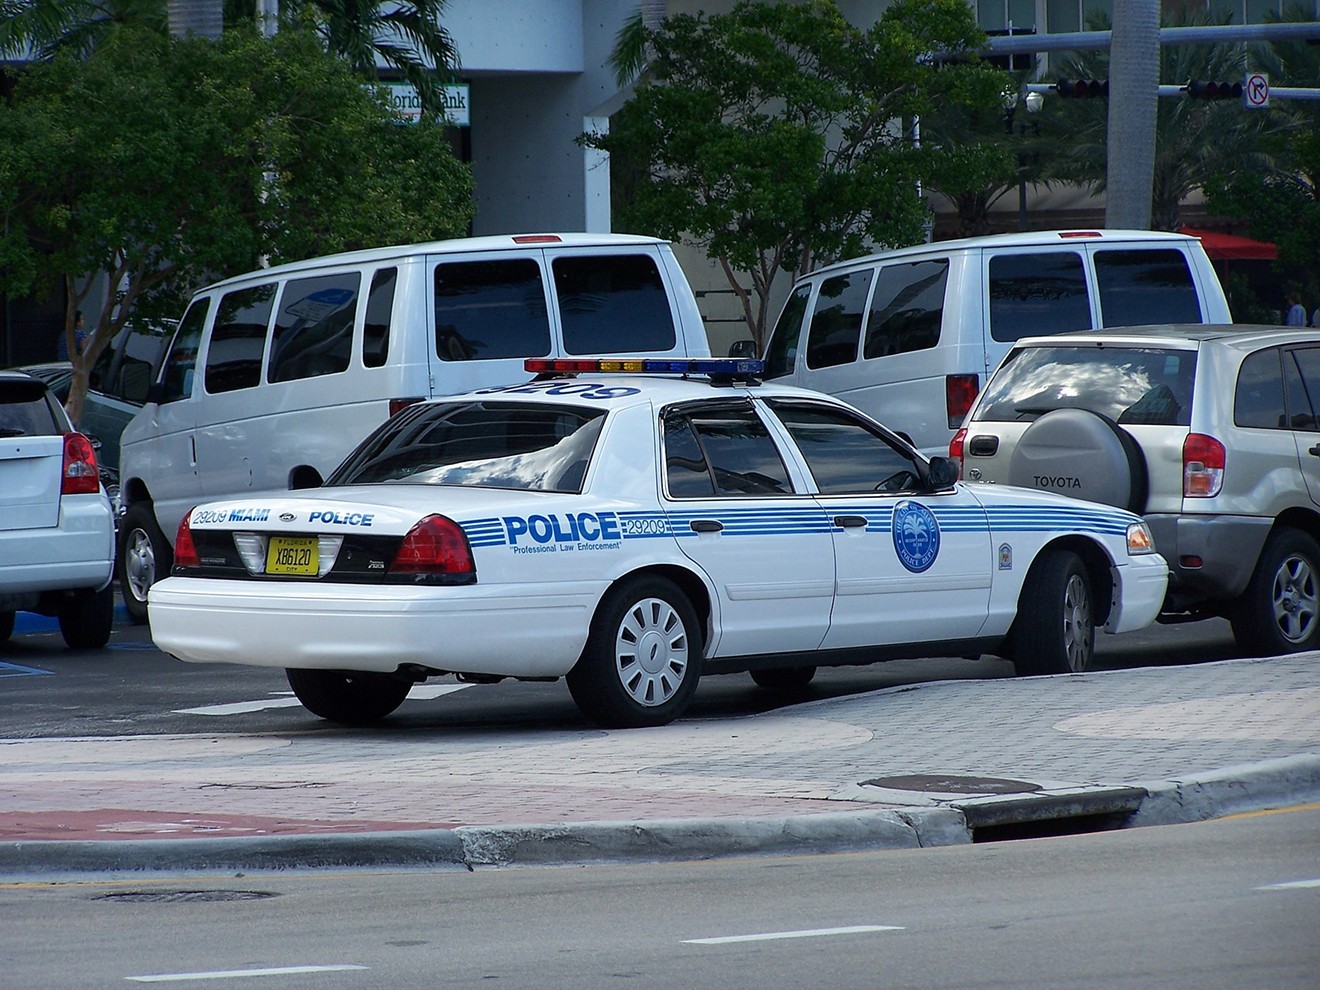 Miami Police Department